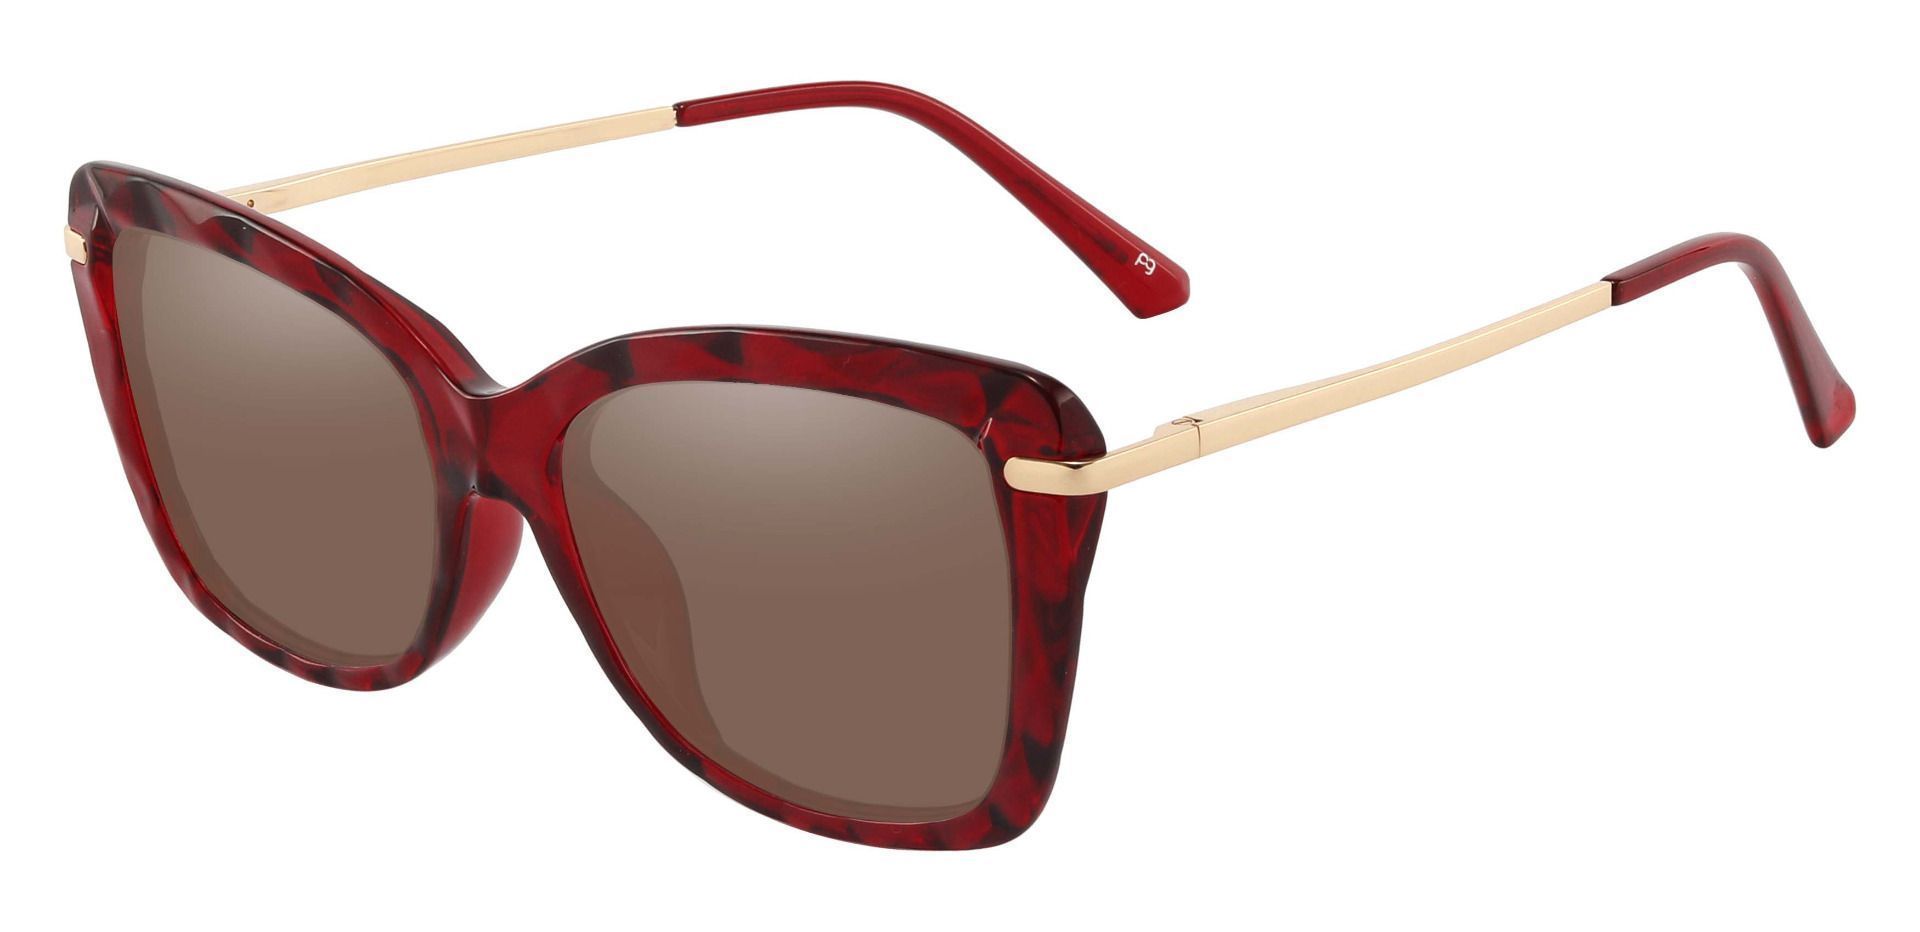 Shoshanna Rectangle Progressive Sunglasses - Red Frame With Brown Lenses